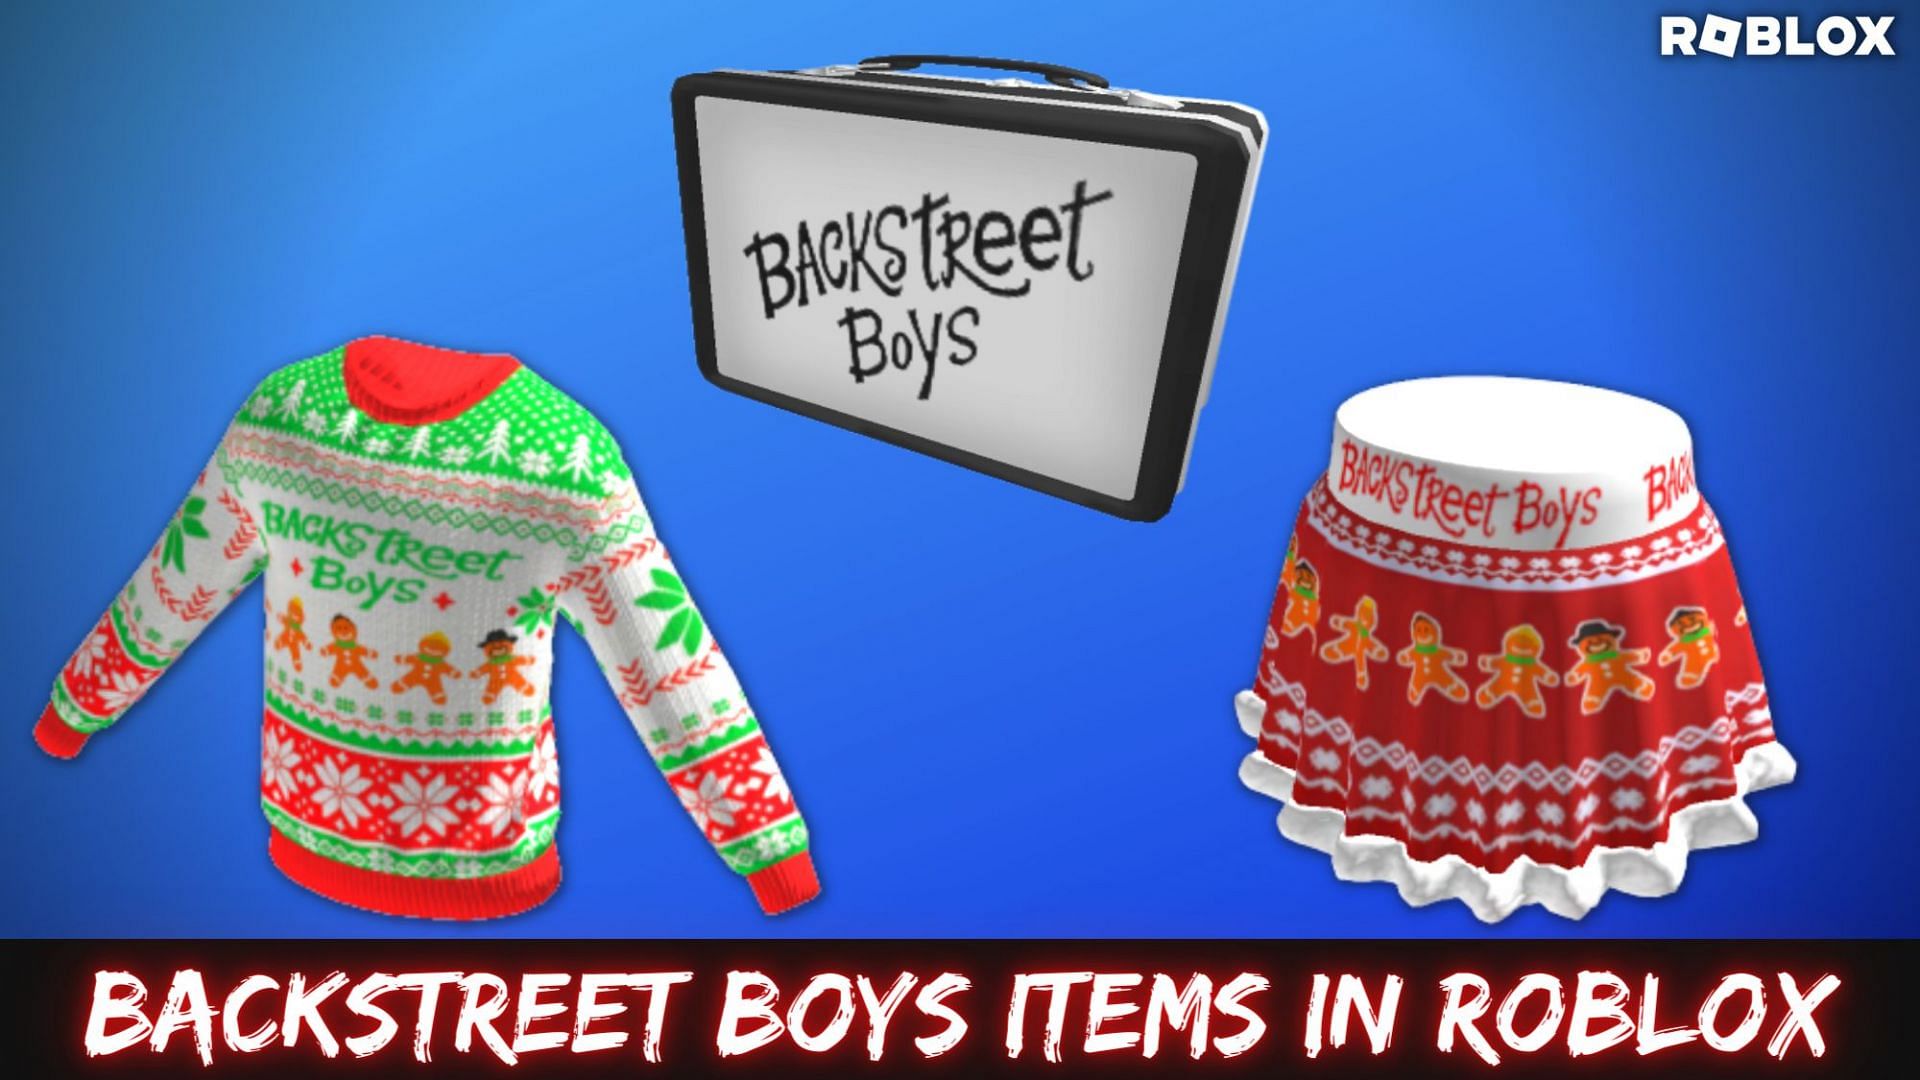 The Backstreet Boys merch sale is live (Image via Sportskeeda)